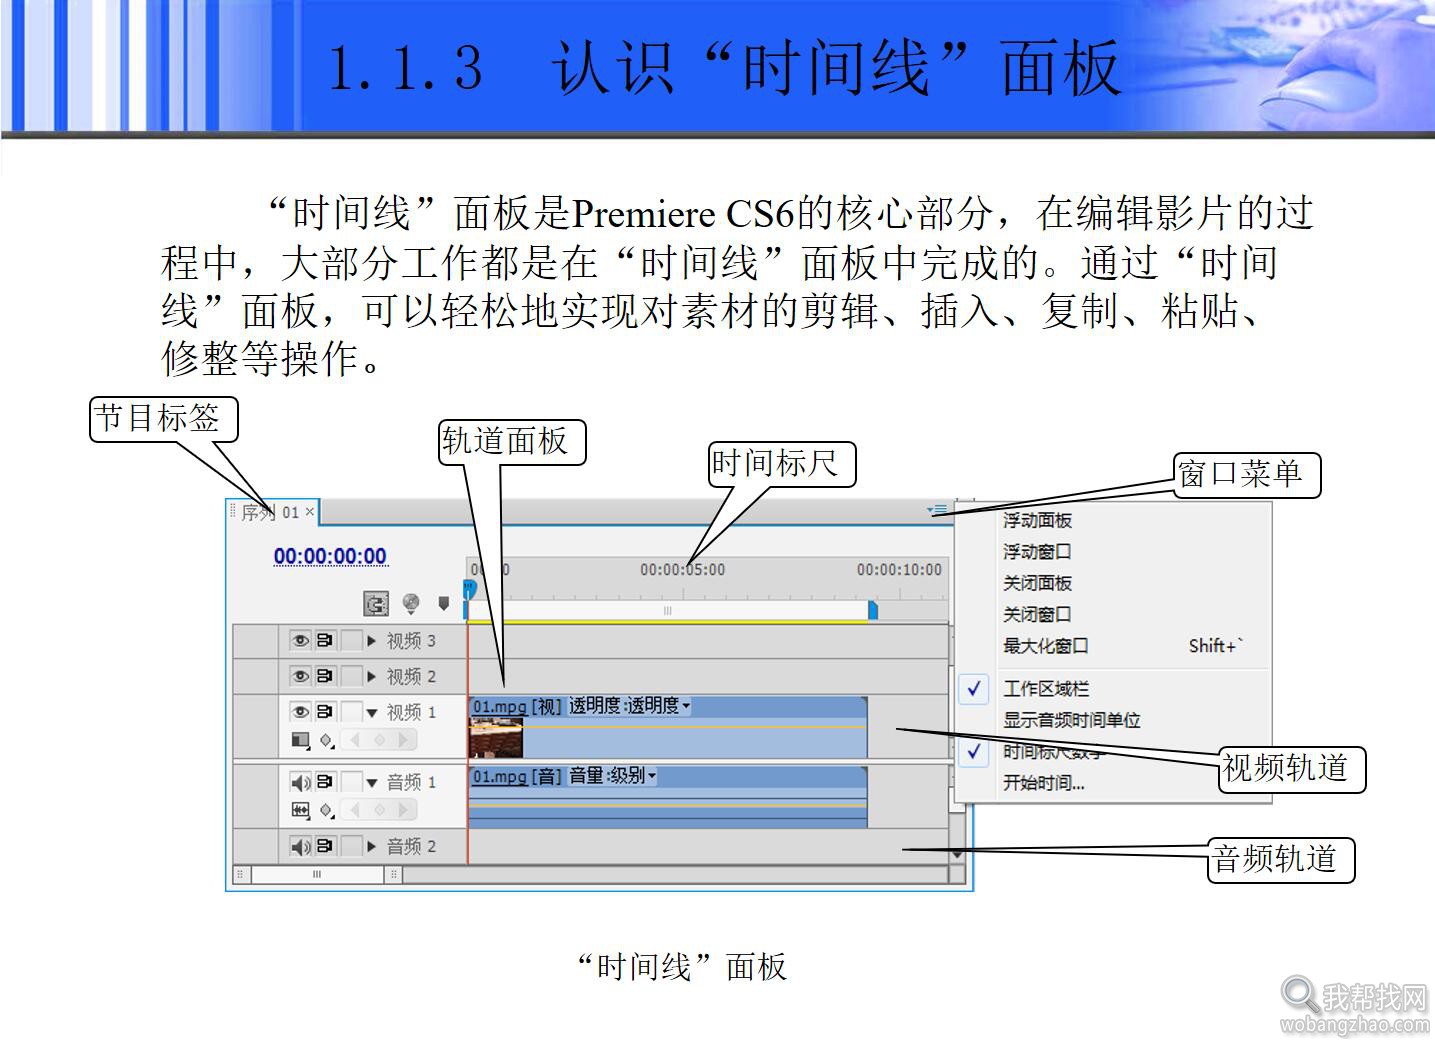 ppt和pdf格式的premiere cs6入门学习教程 (3).jpg